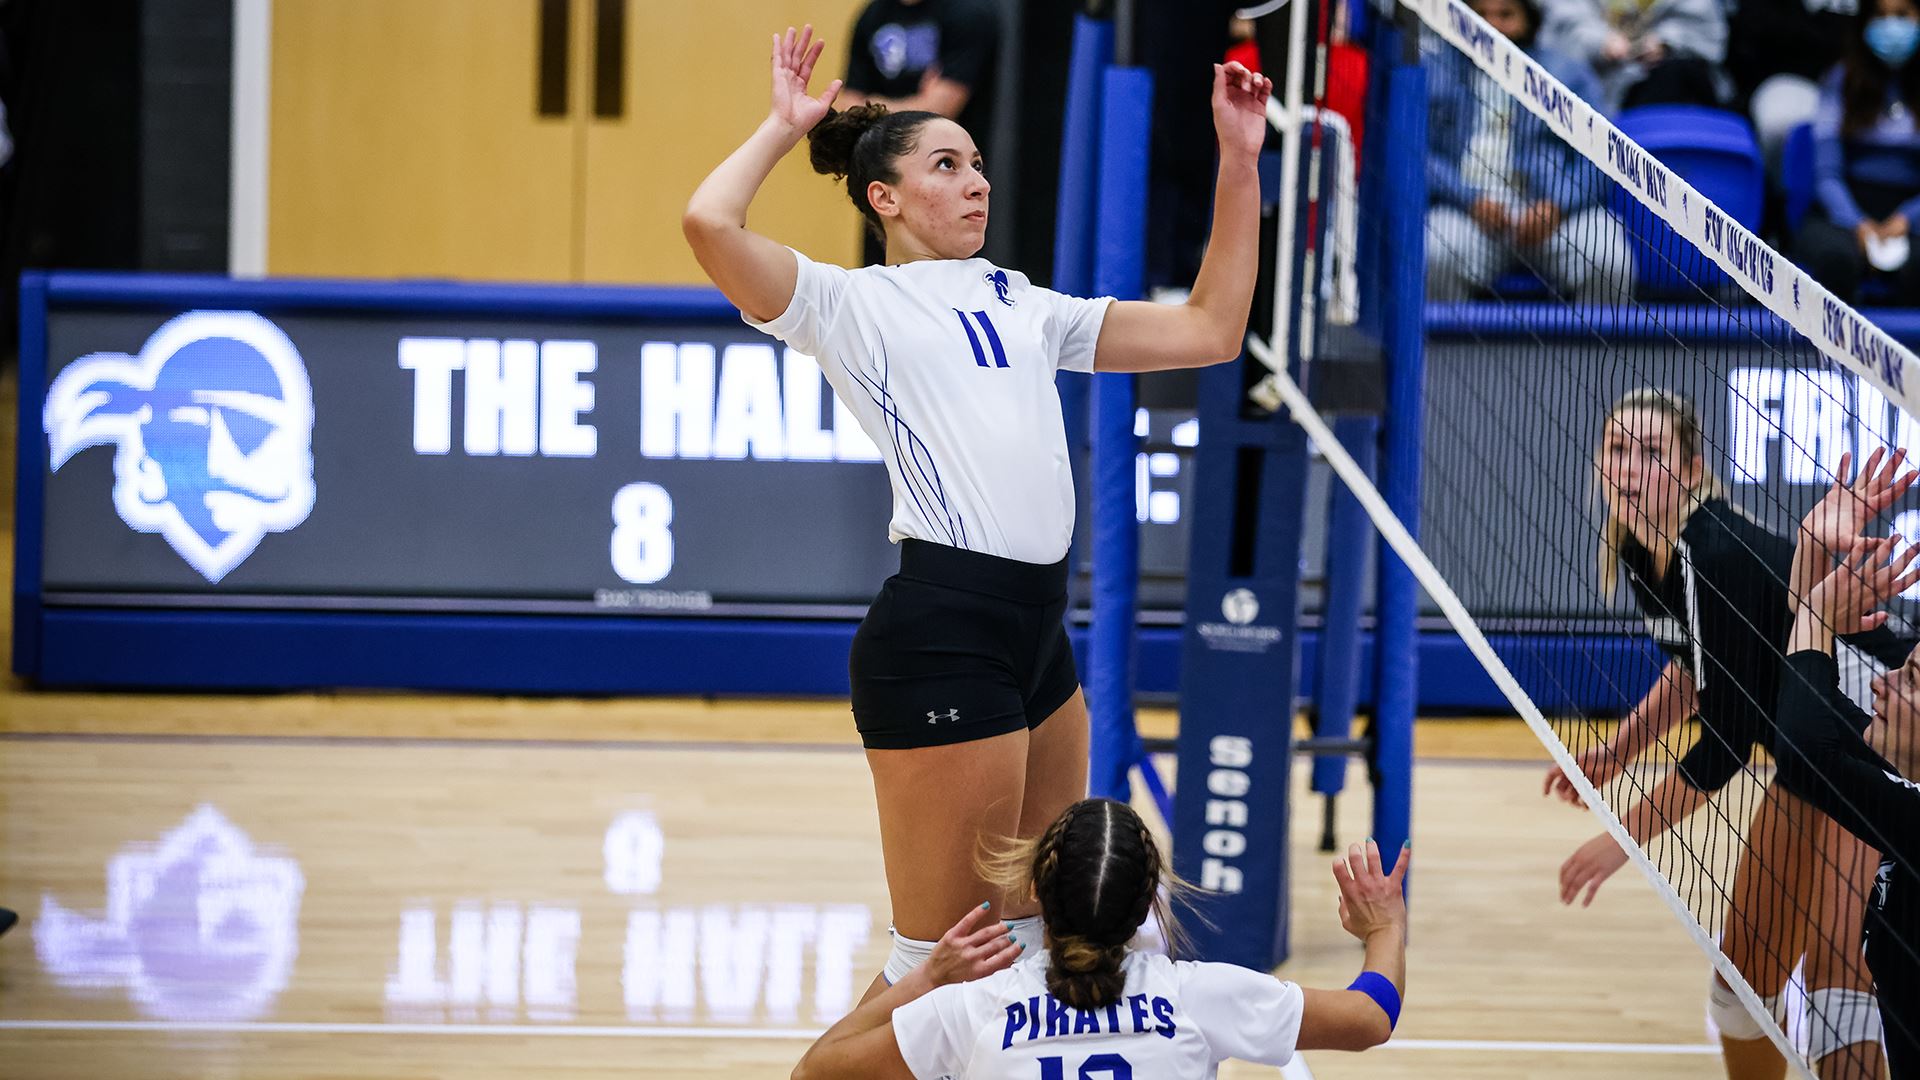 A Seton Hall women's volleyball player attempts a spike during a match.